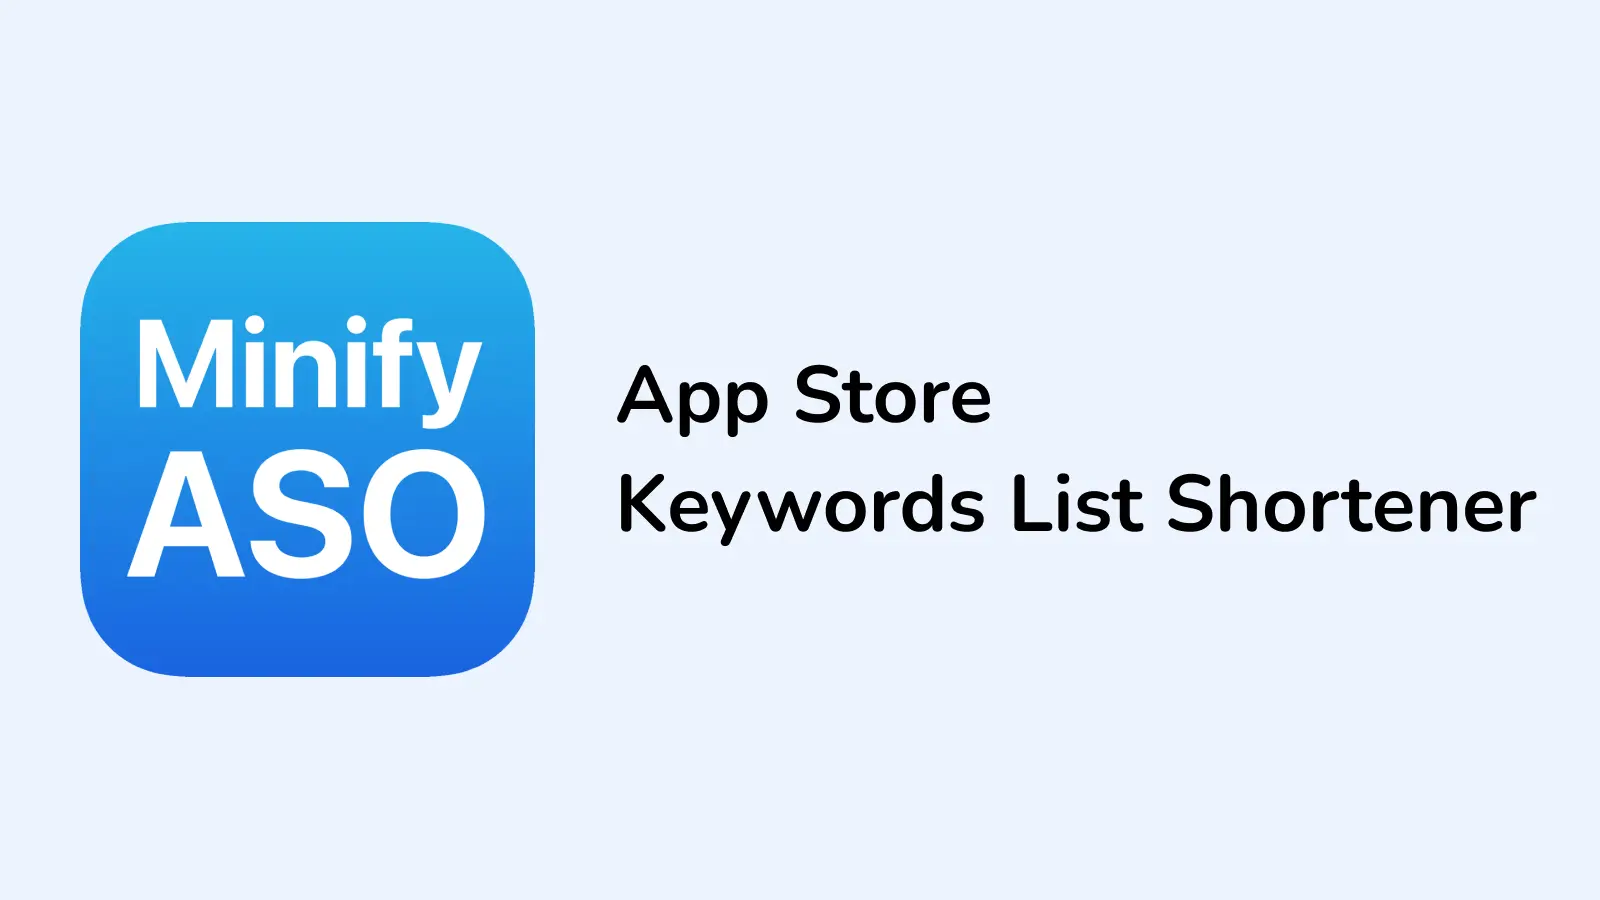 Minify ASO - App Store Keywords List Shortener